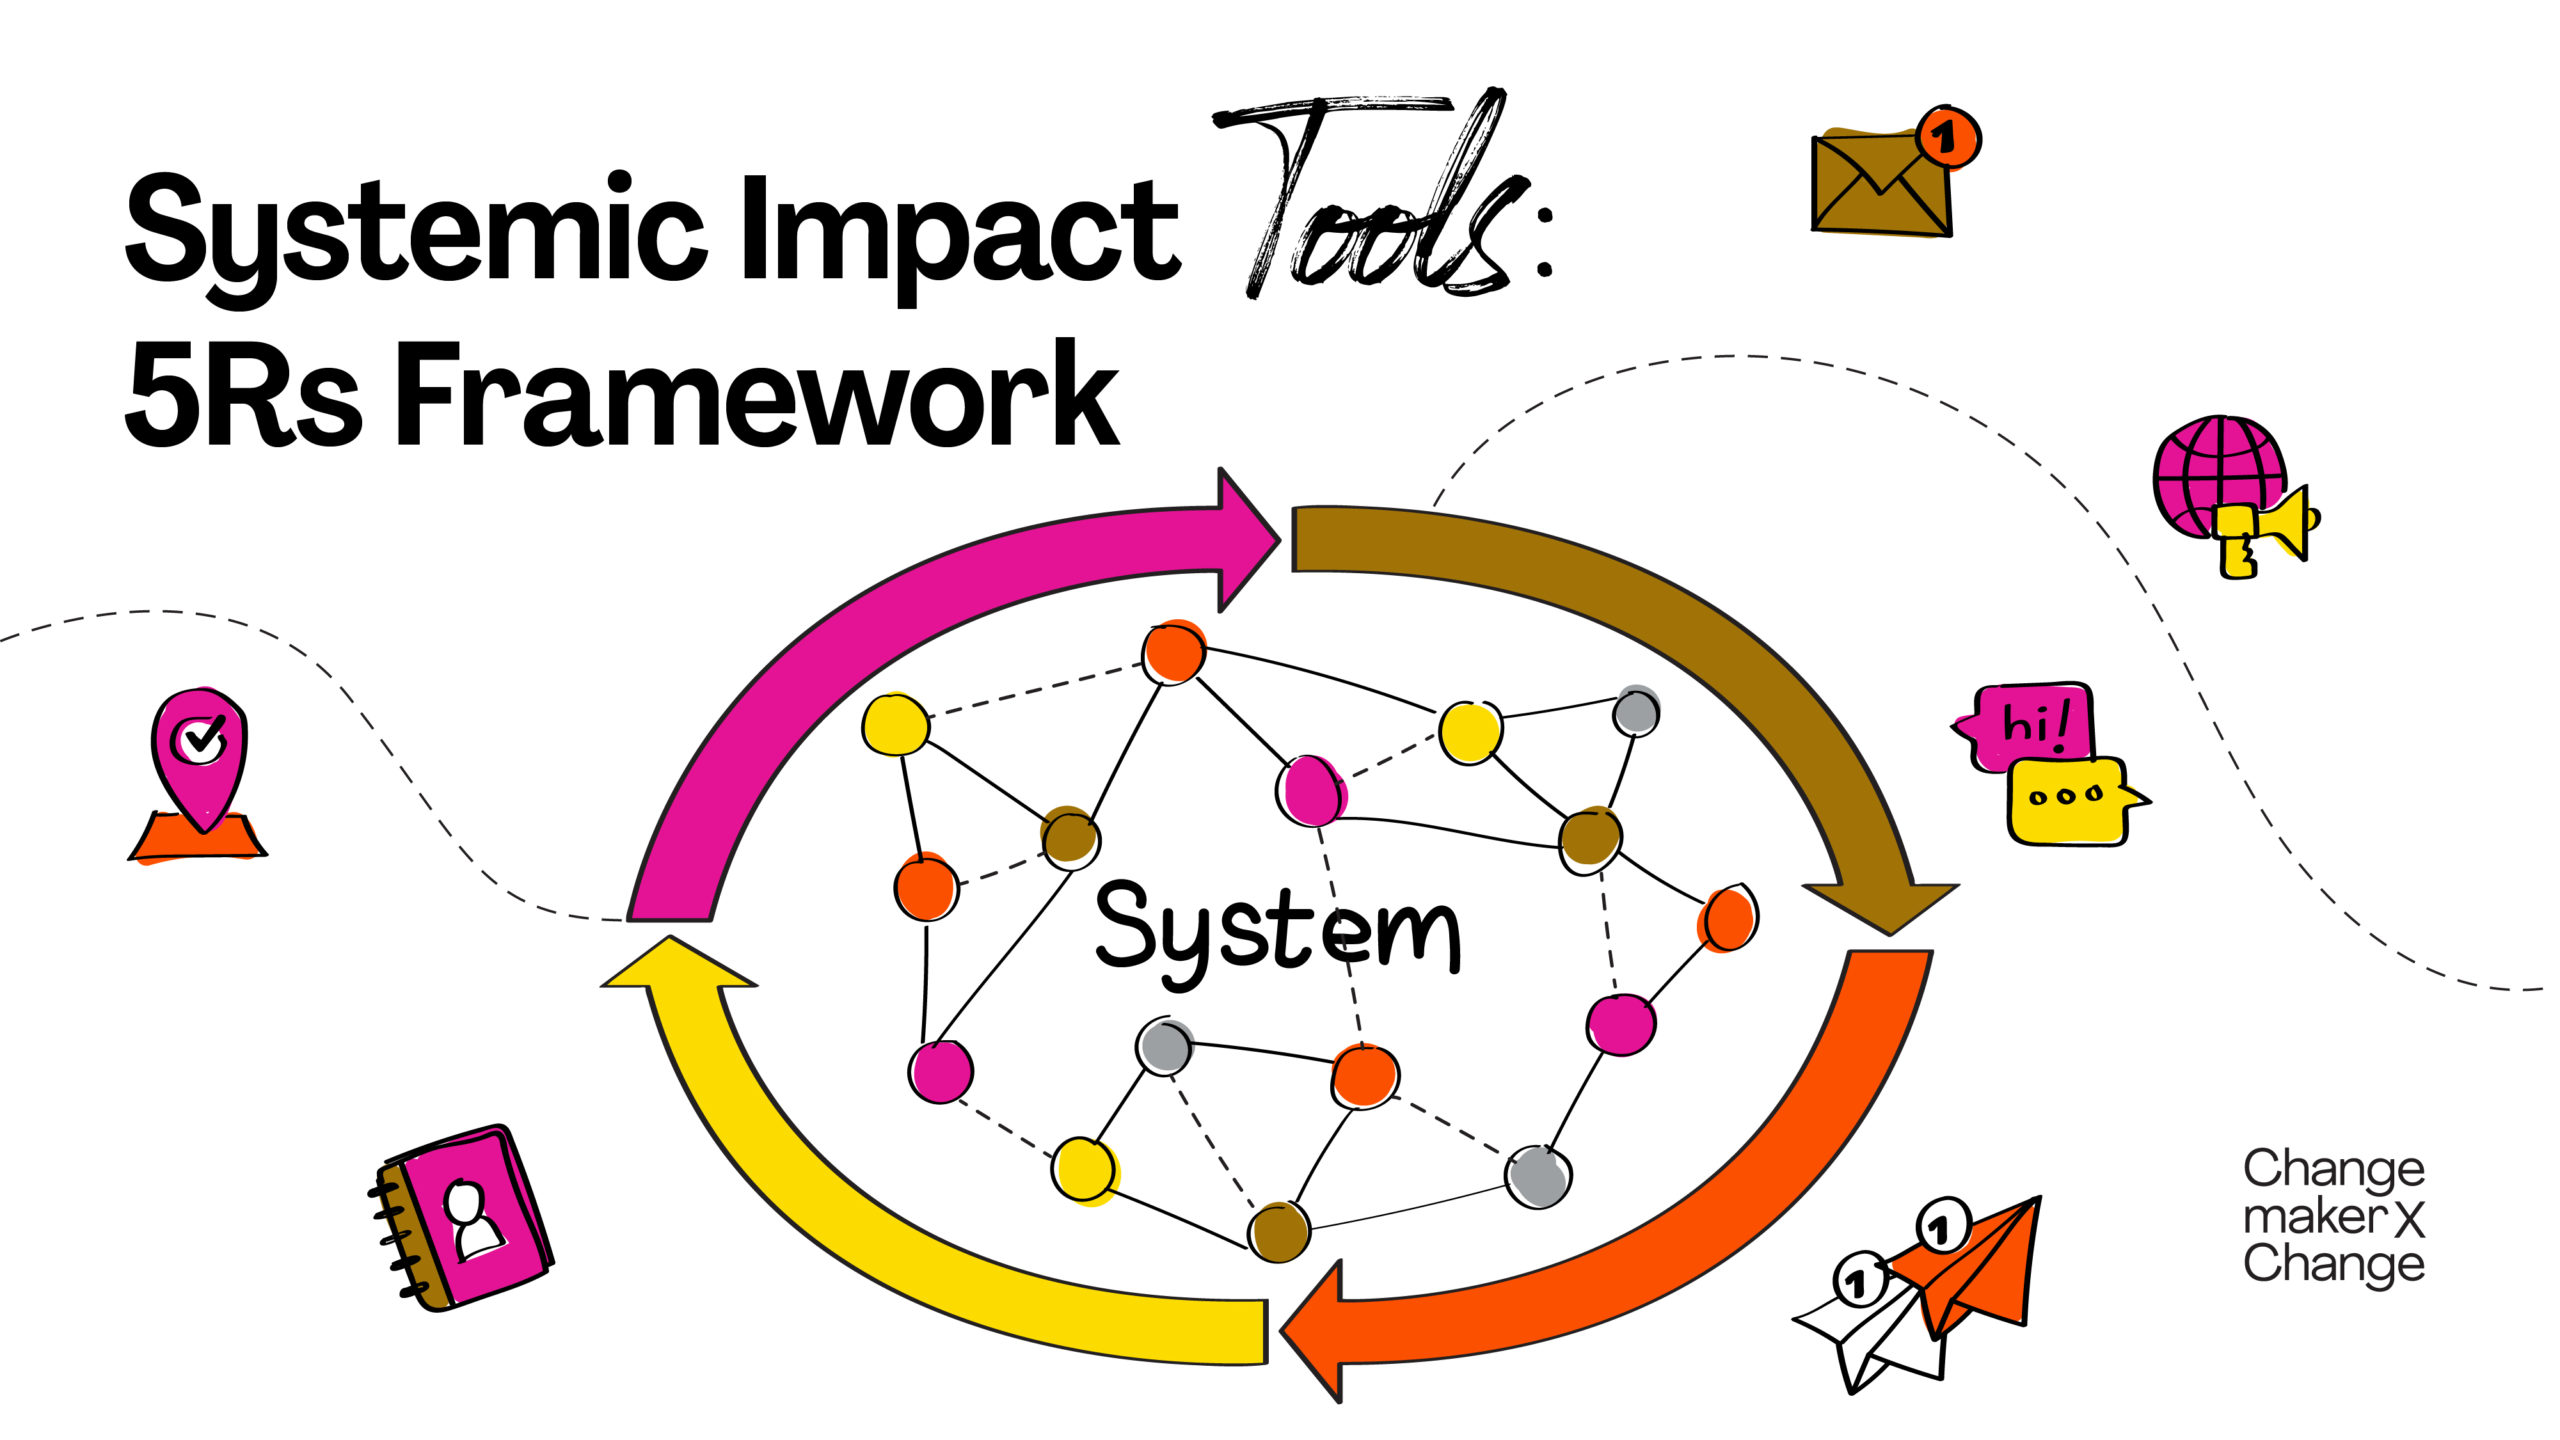 ChangemakerXchange Systemic Impact Resources